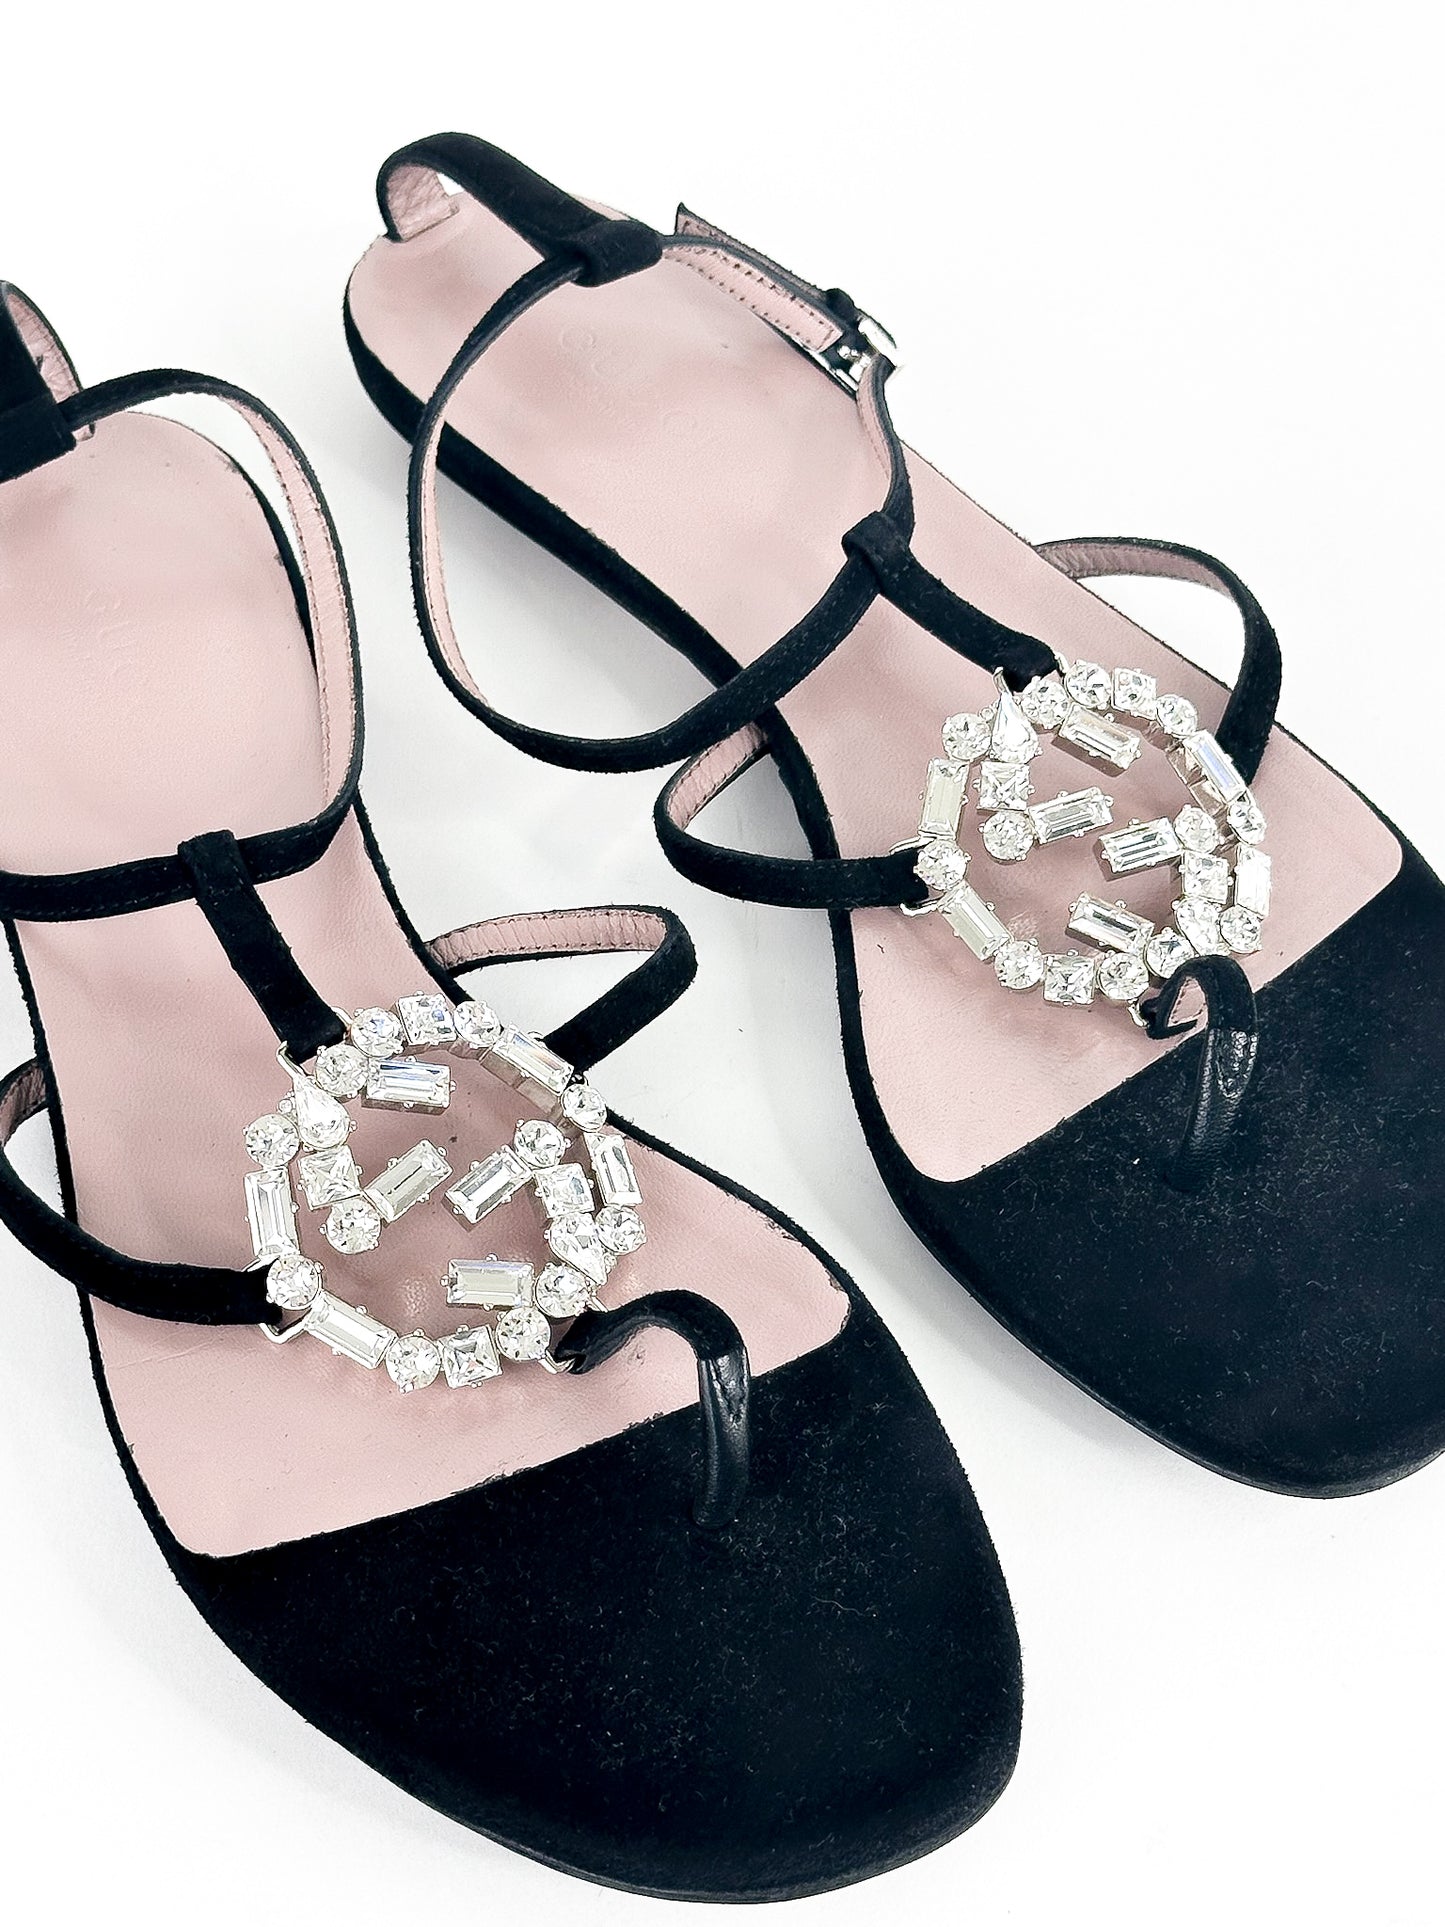 Gucci Black Suede GG Interlocking Crystal Embellished Flat Sandals Size 37